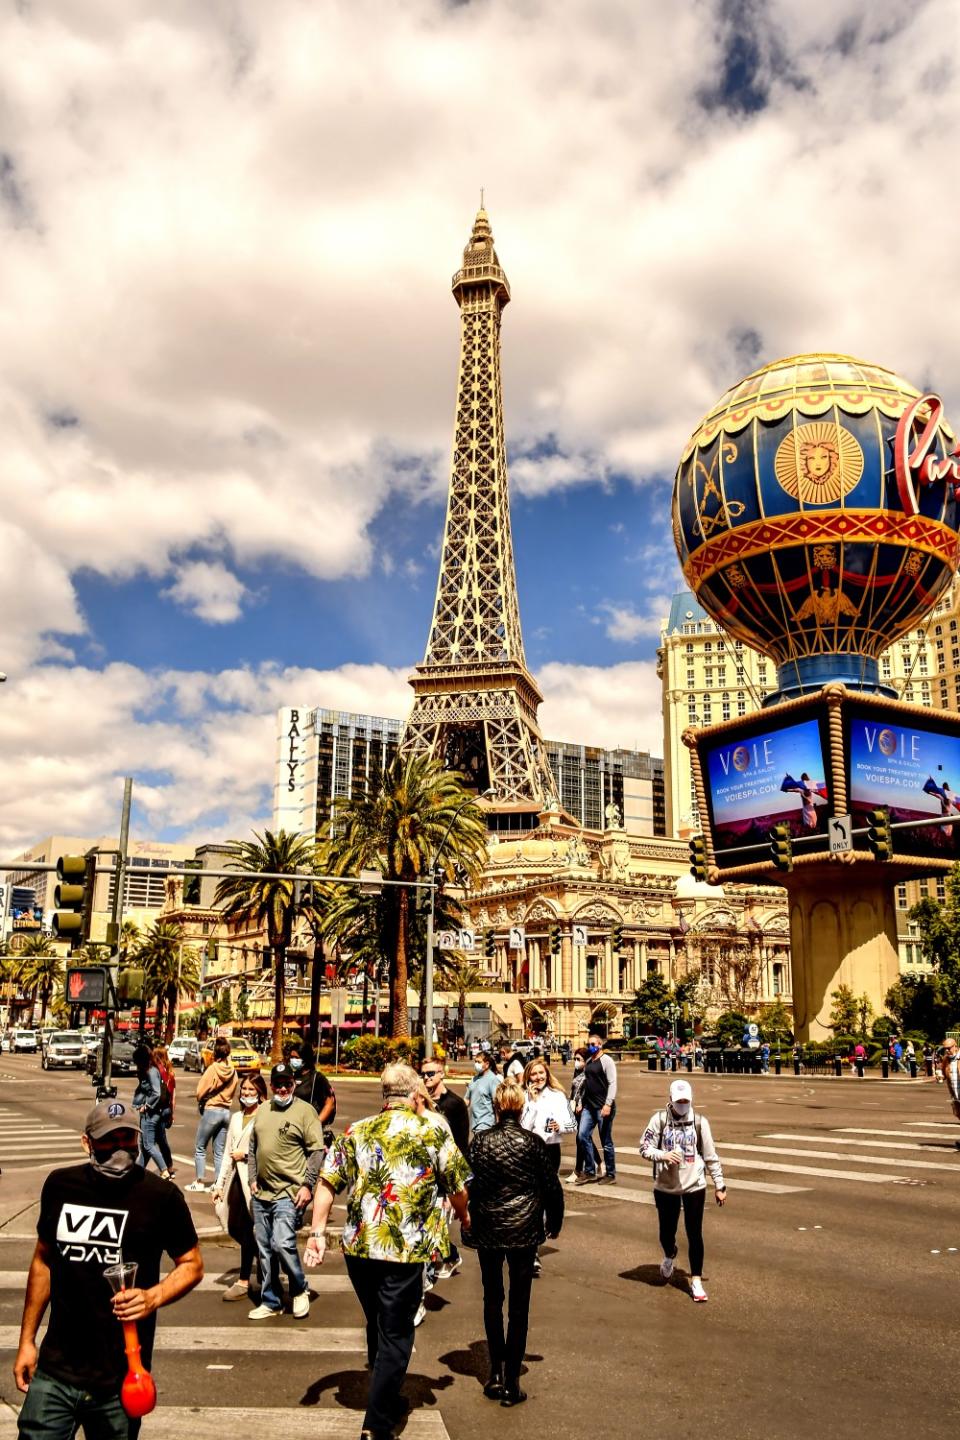 The Eiffel Tower replica at the Paris Las Vegas hotel